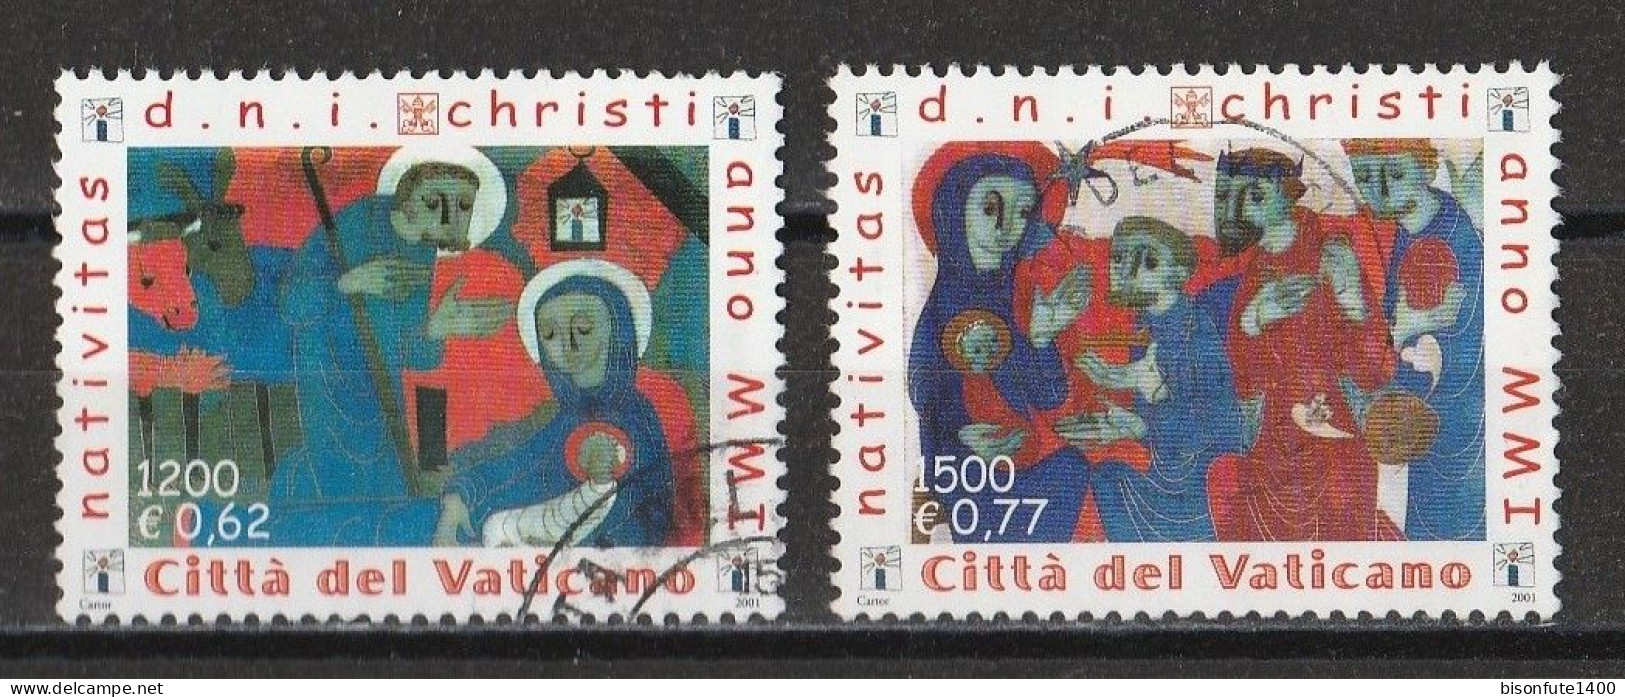 Vatican 2001 : Timbres Yvert & Tellier N° 1238 - 1239 - 1240 - 1246 - 1247 - 1248 Et 1249 Oblitérés. - Gebraucht